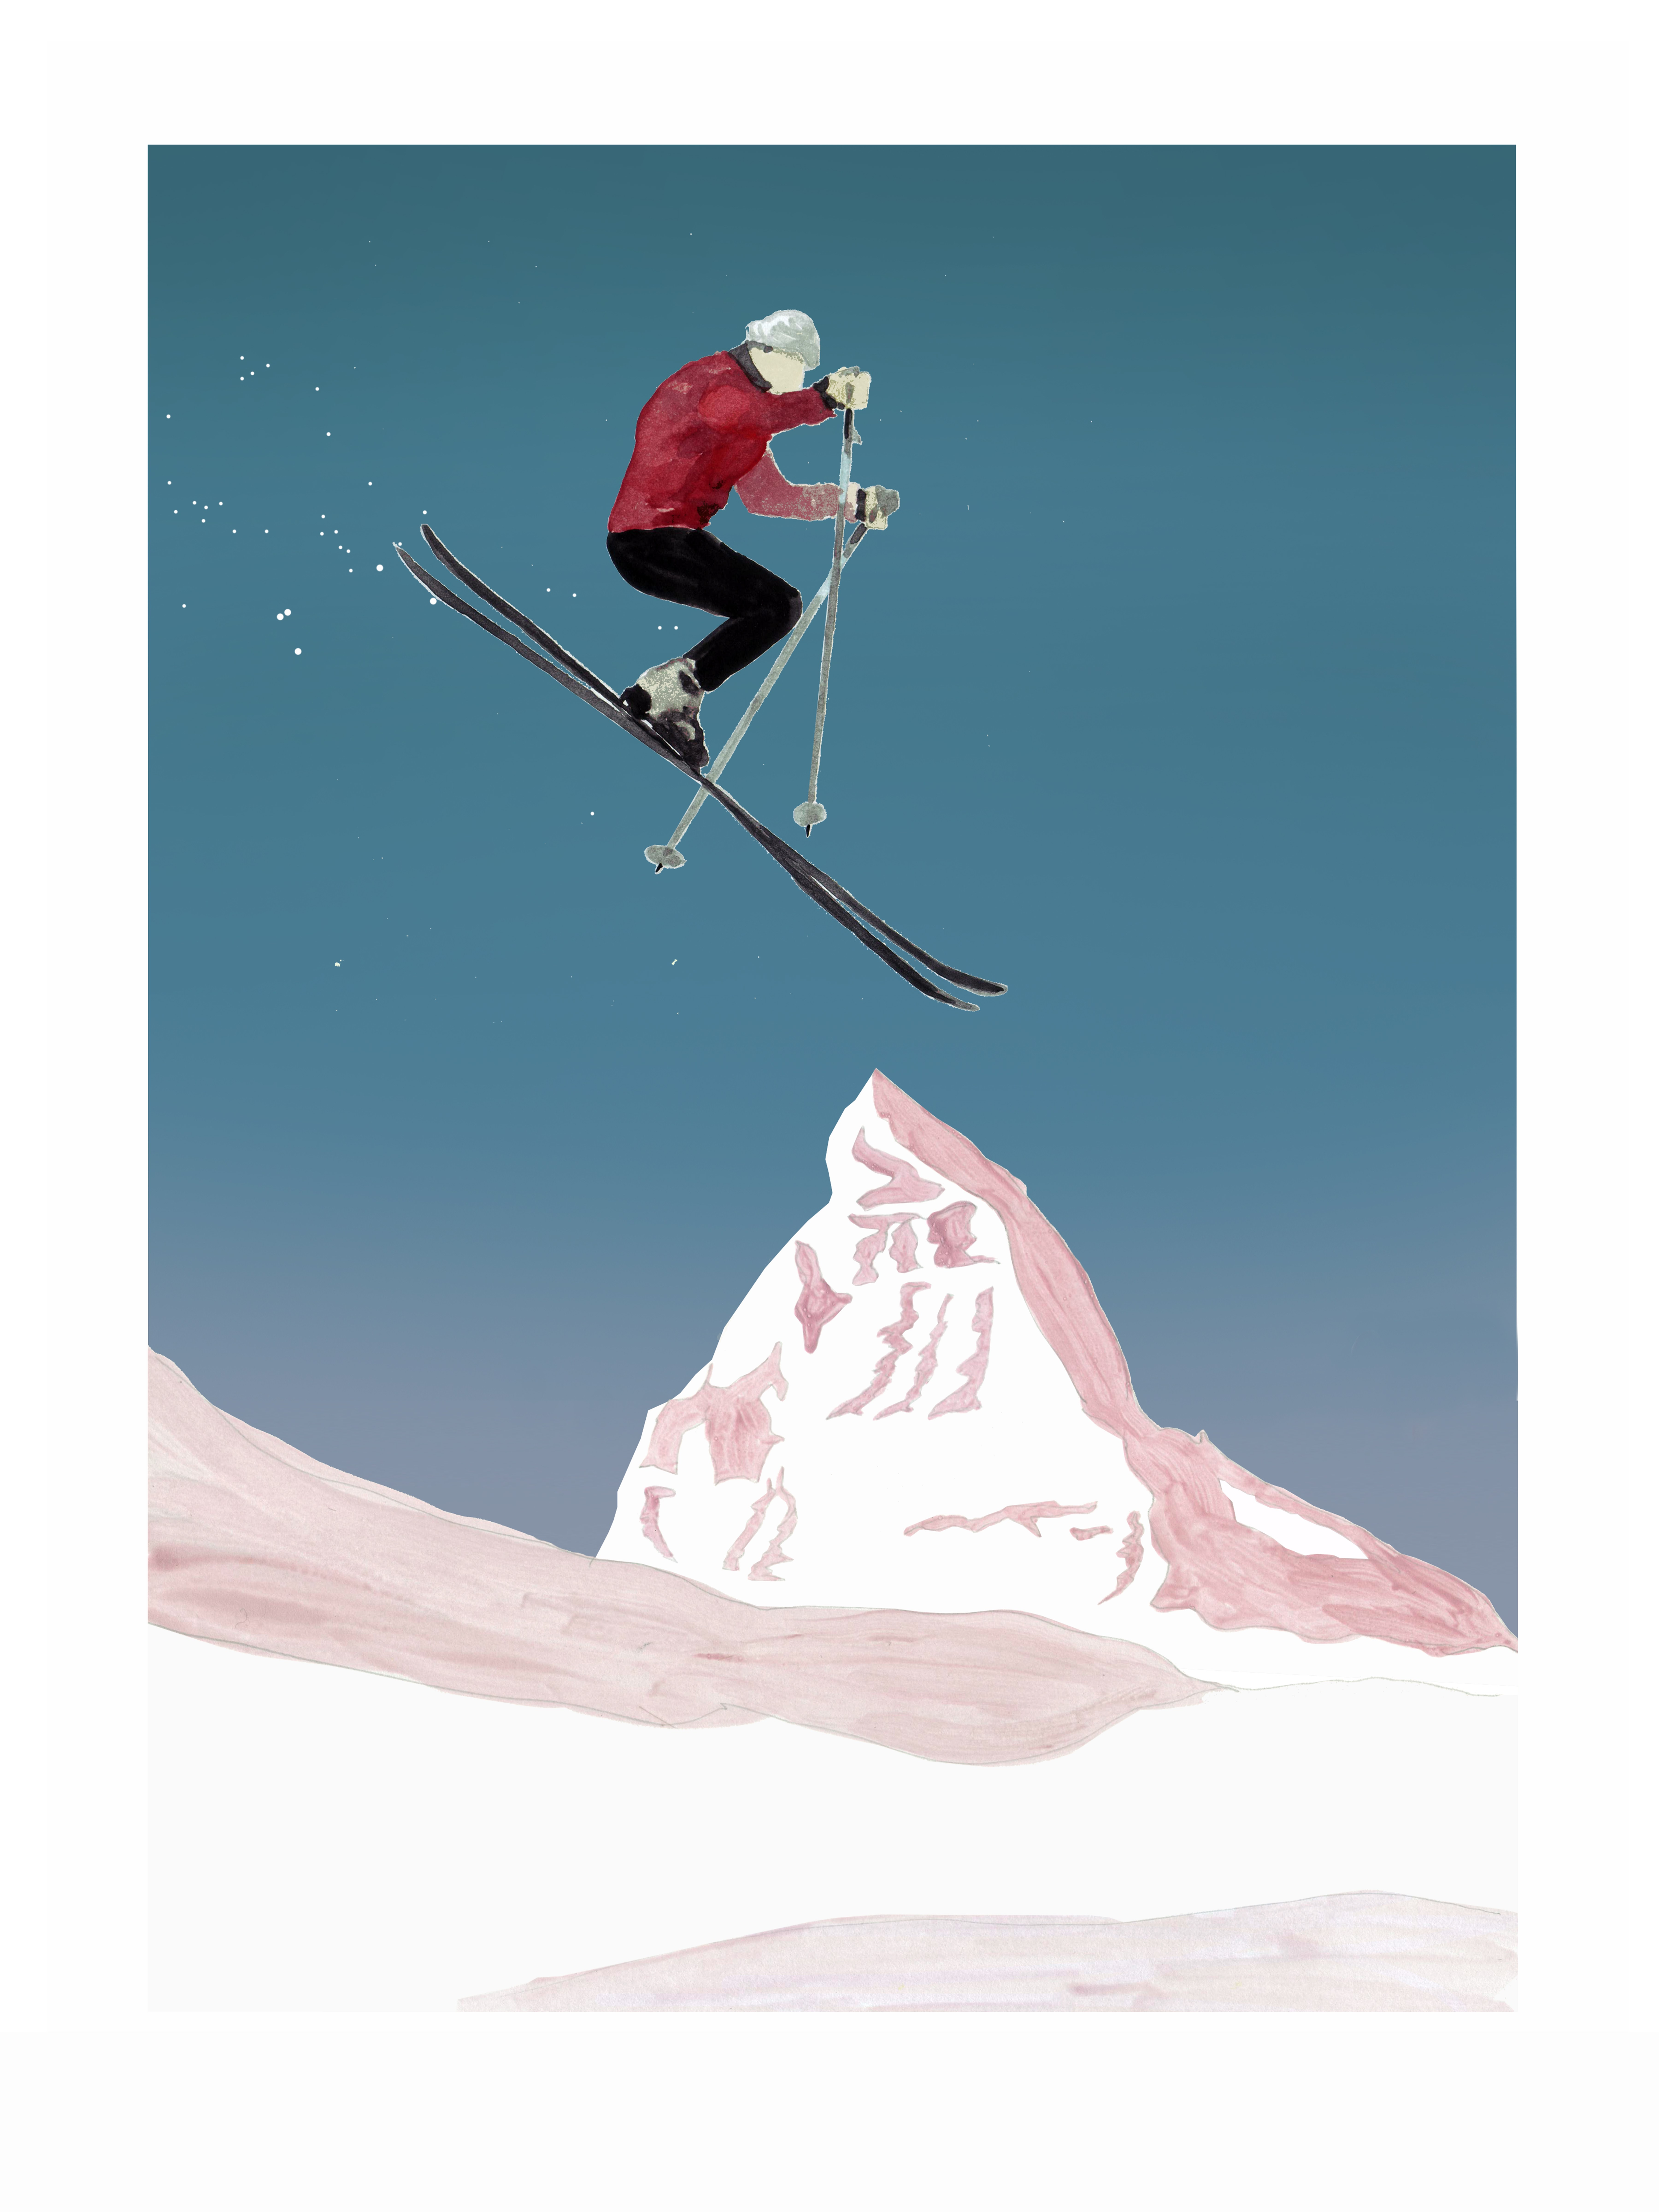 662-mountain-love---skier.jpg